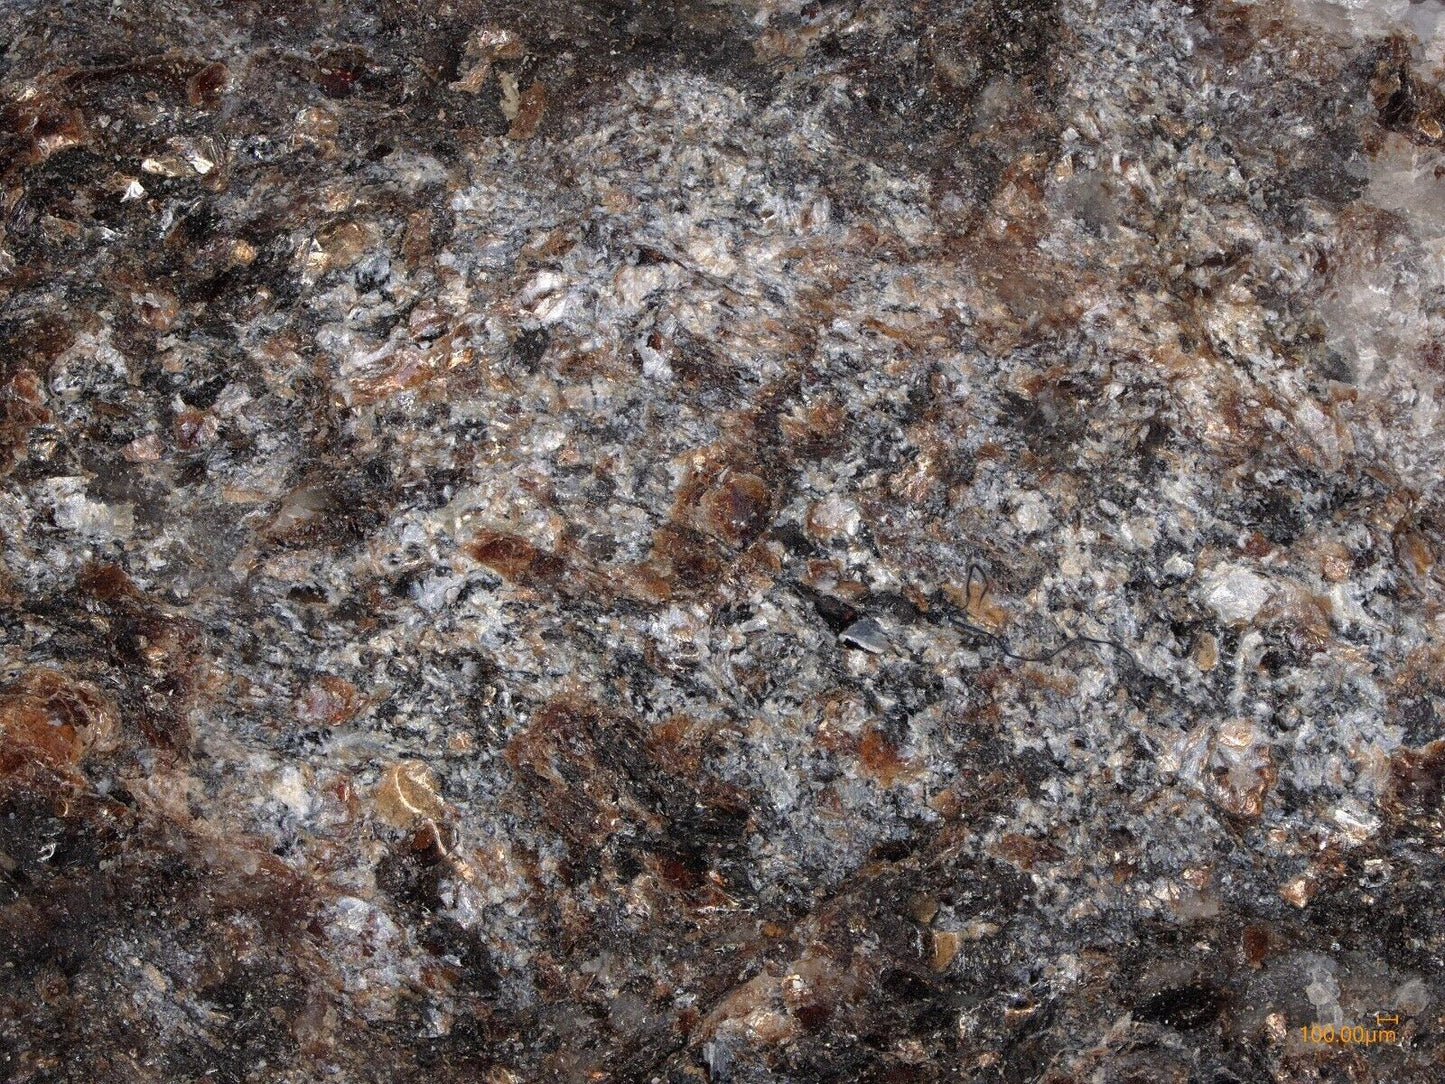 Colourless platy barysilite from Langban, Filipstad, Sweden